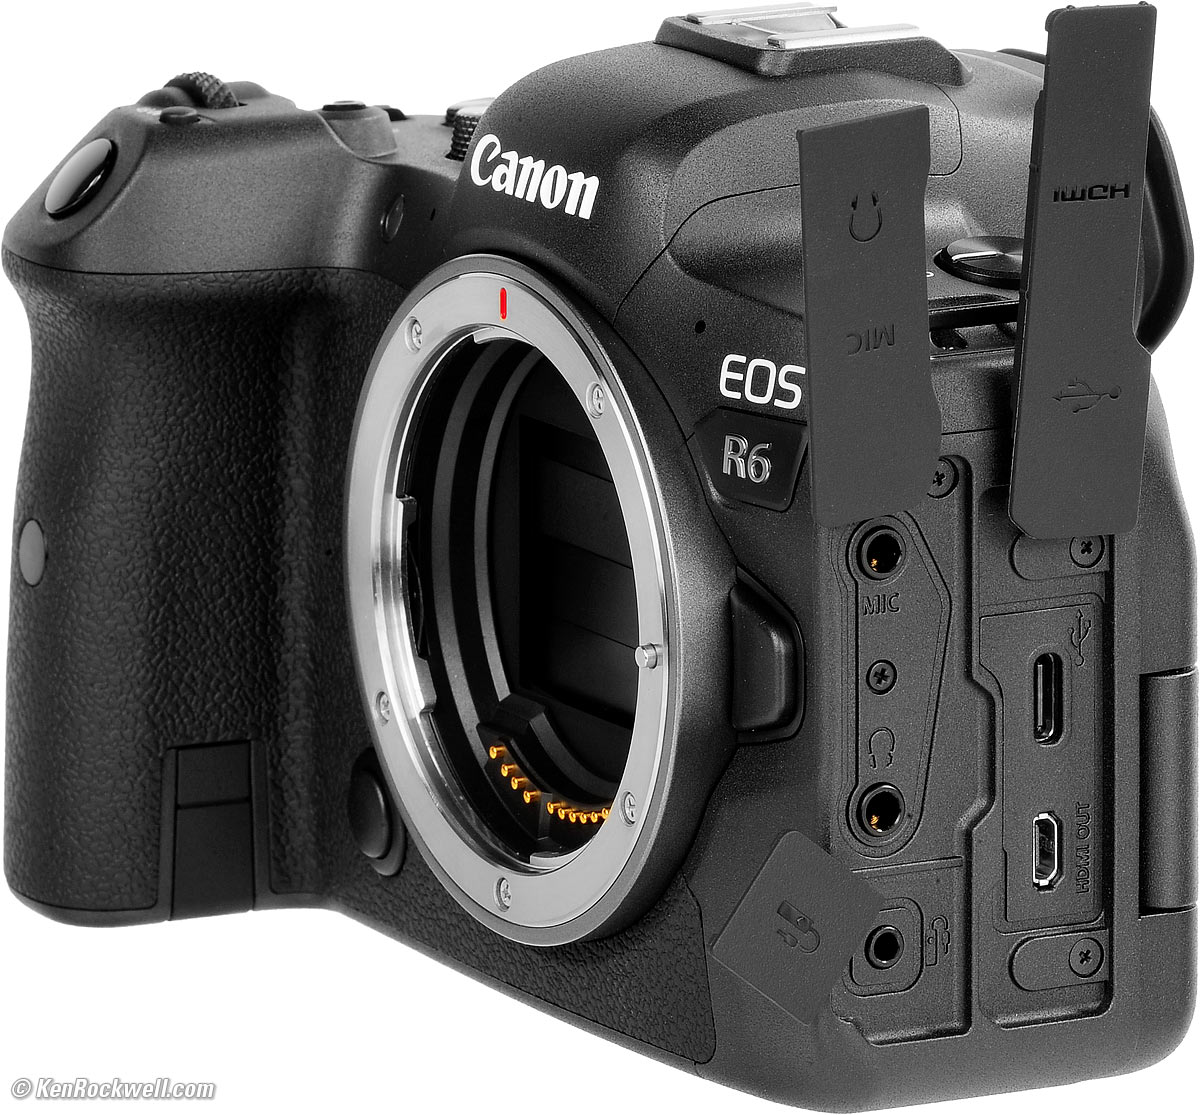 Canon Eos R6 Review